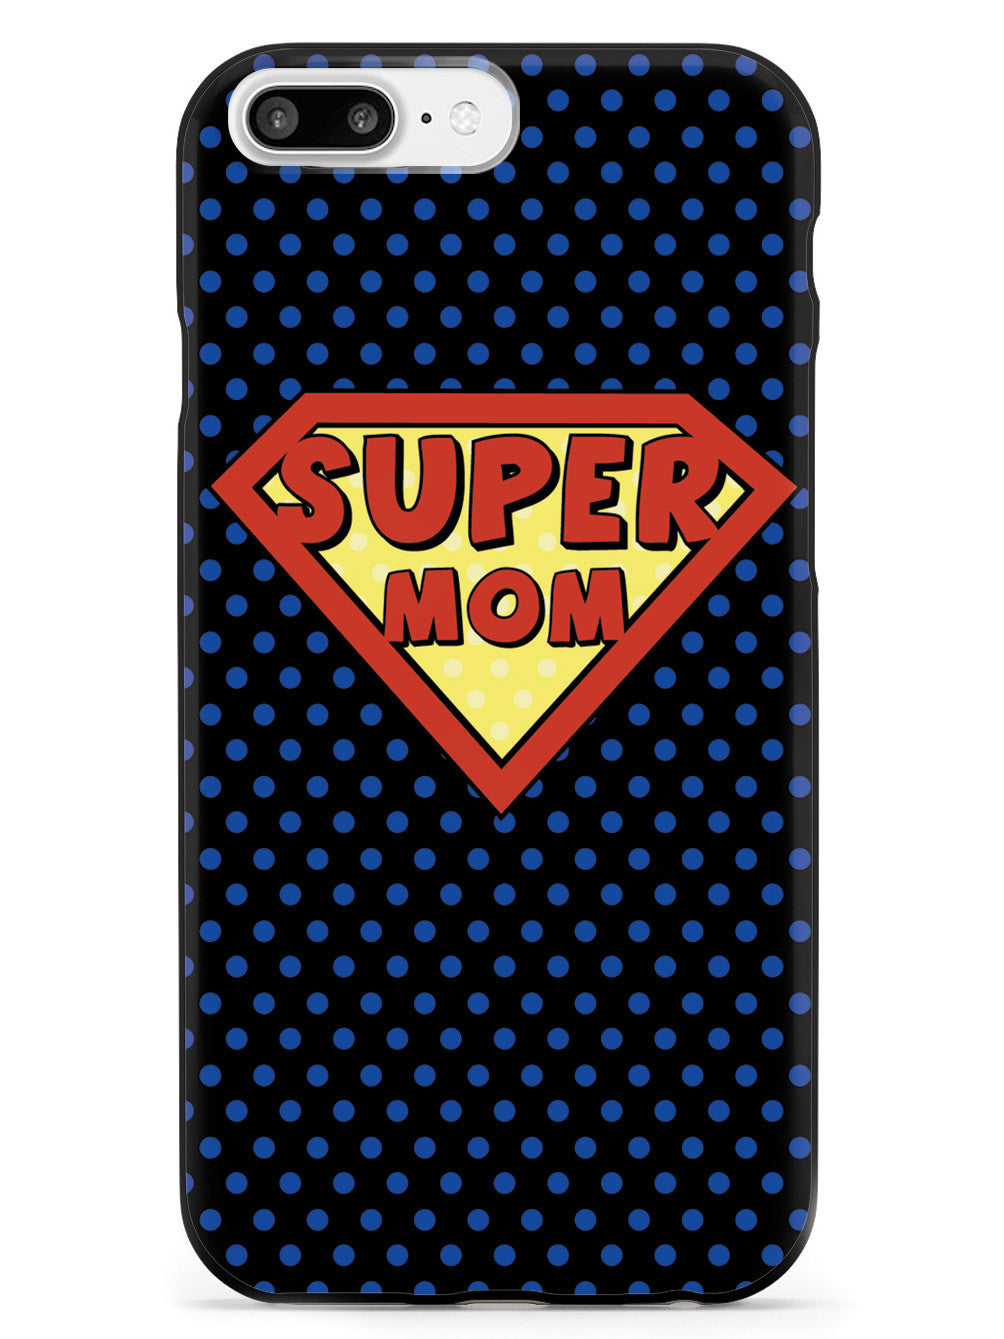 SUPER MOM - Polka Dots - Black Case